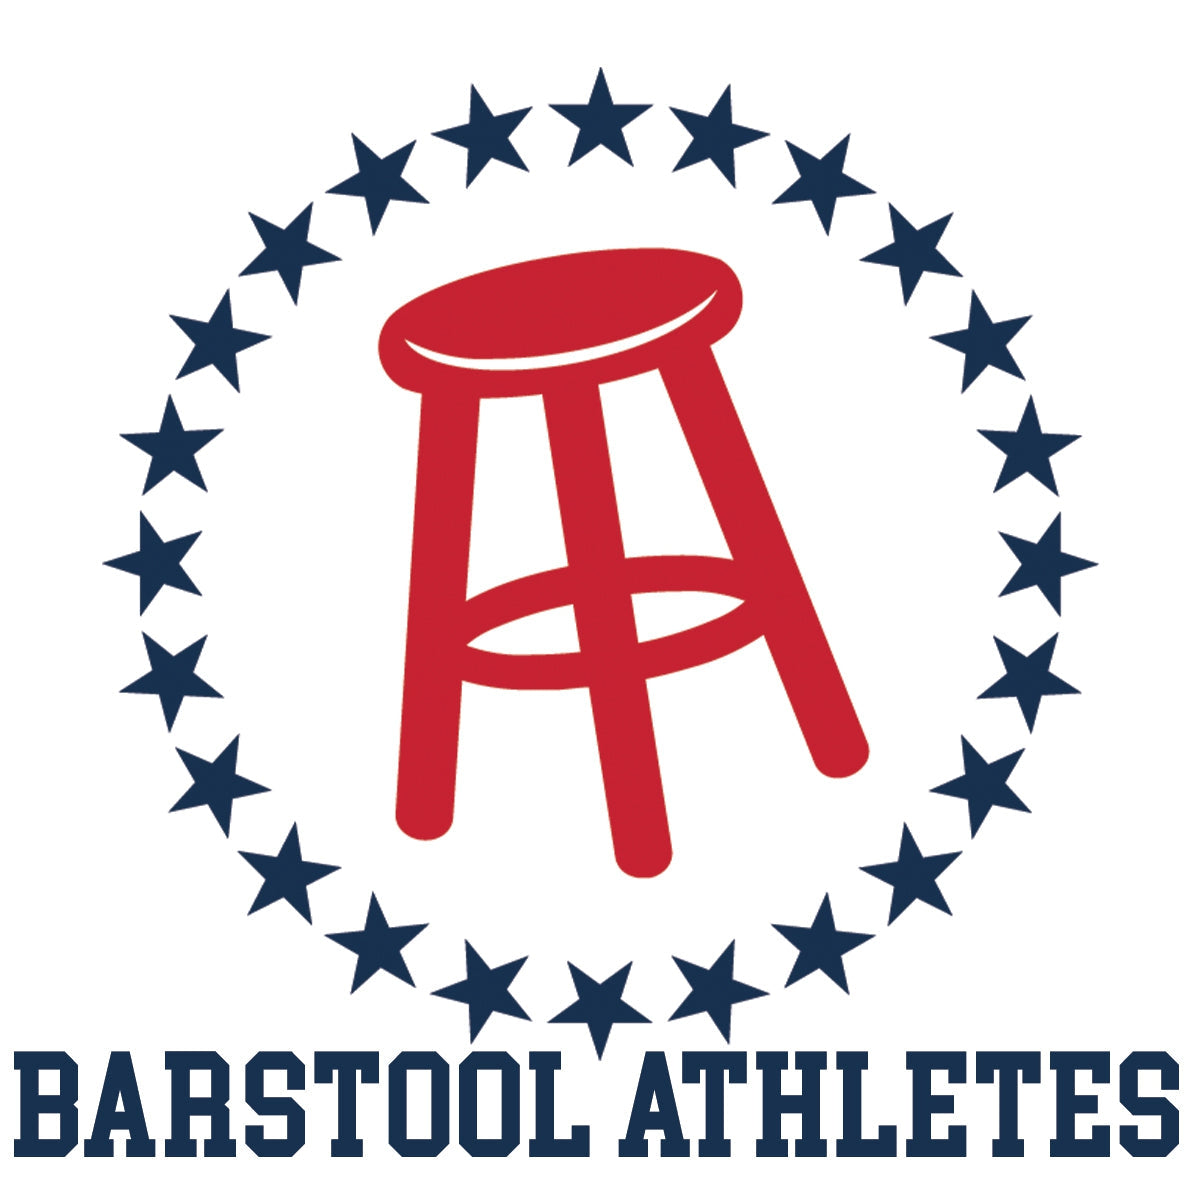 Barstool Athletes – Barstool Sports